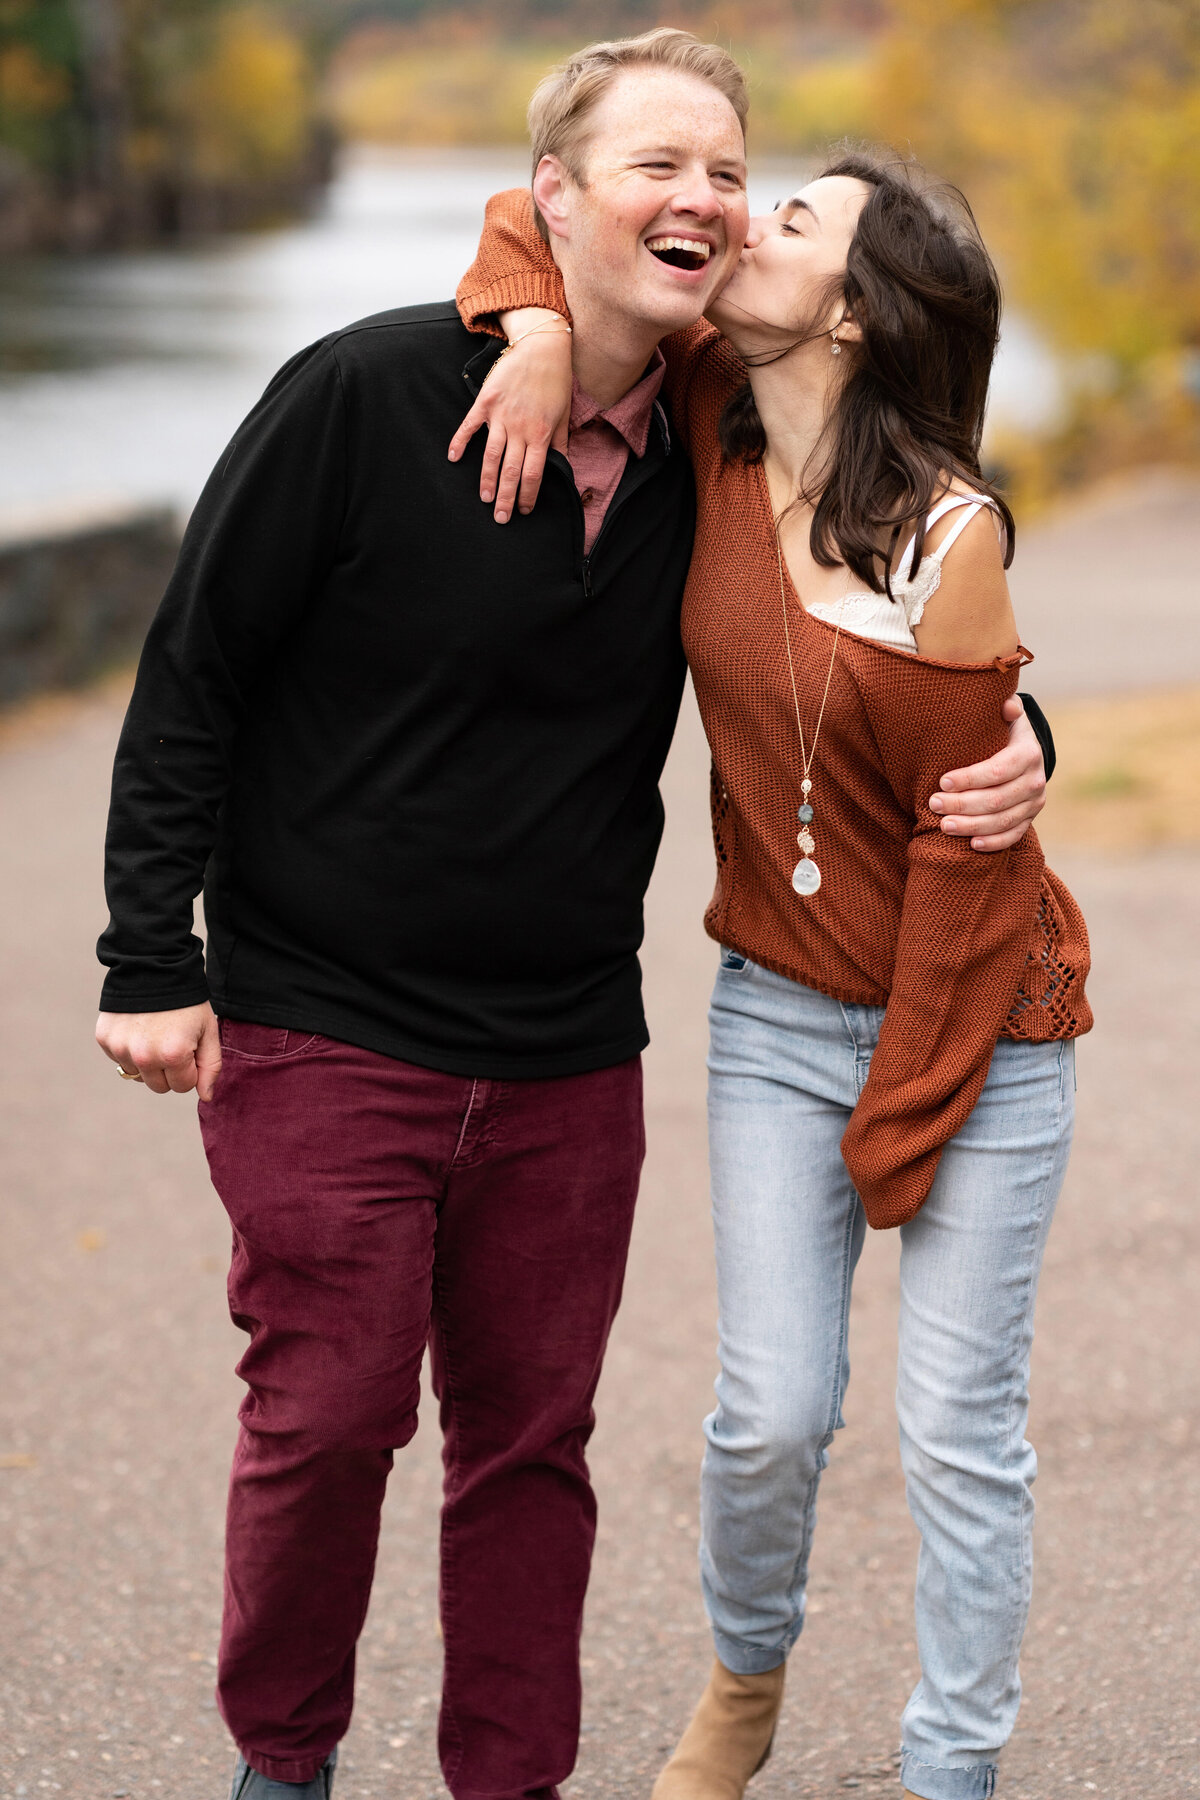 Woman kisses man while walking in Taylor's Falls, Minnesota.